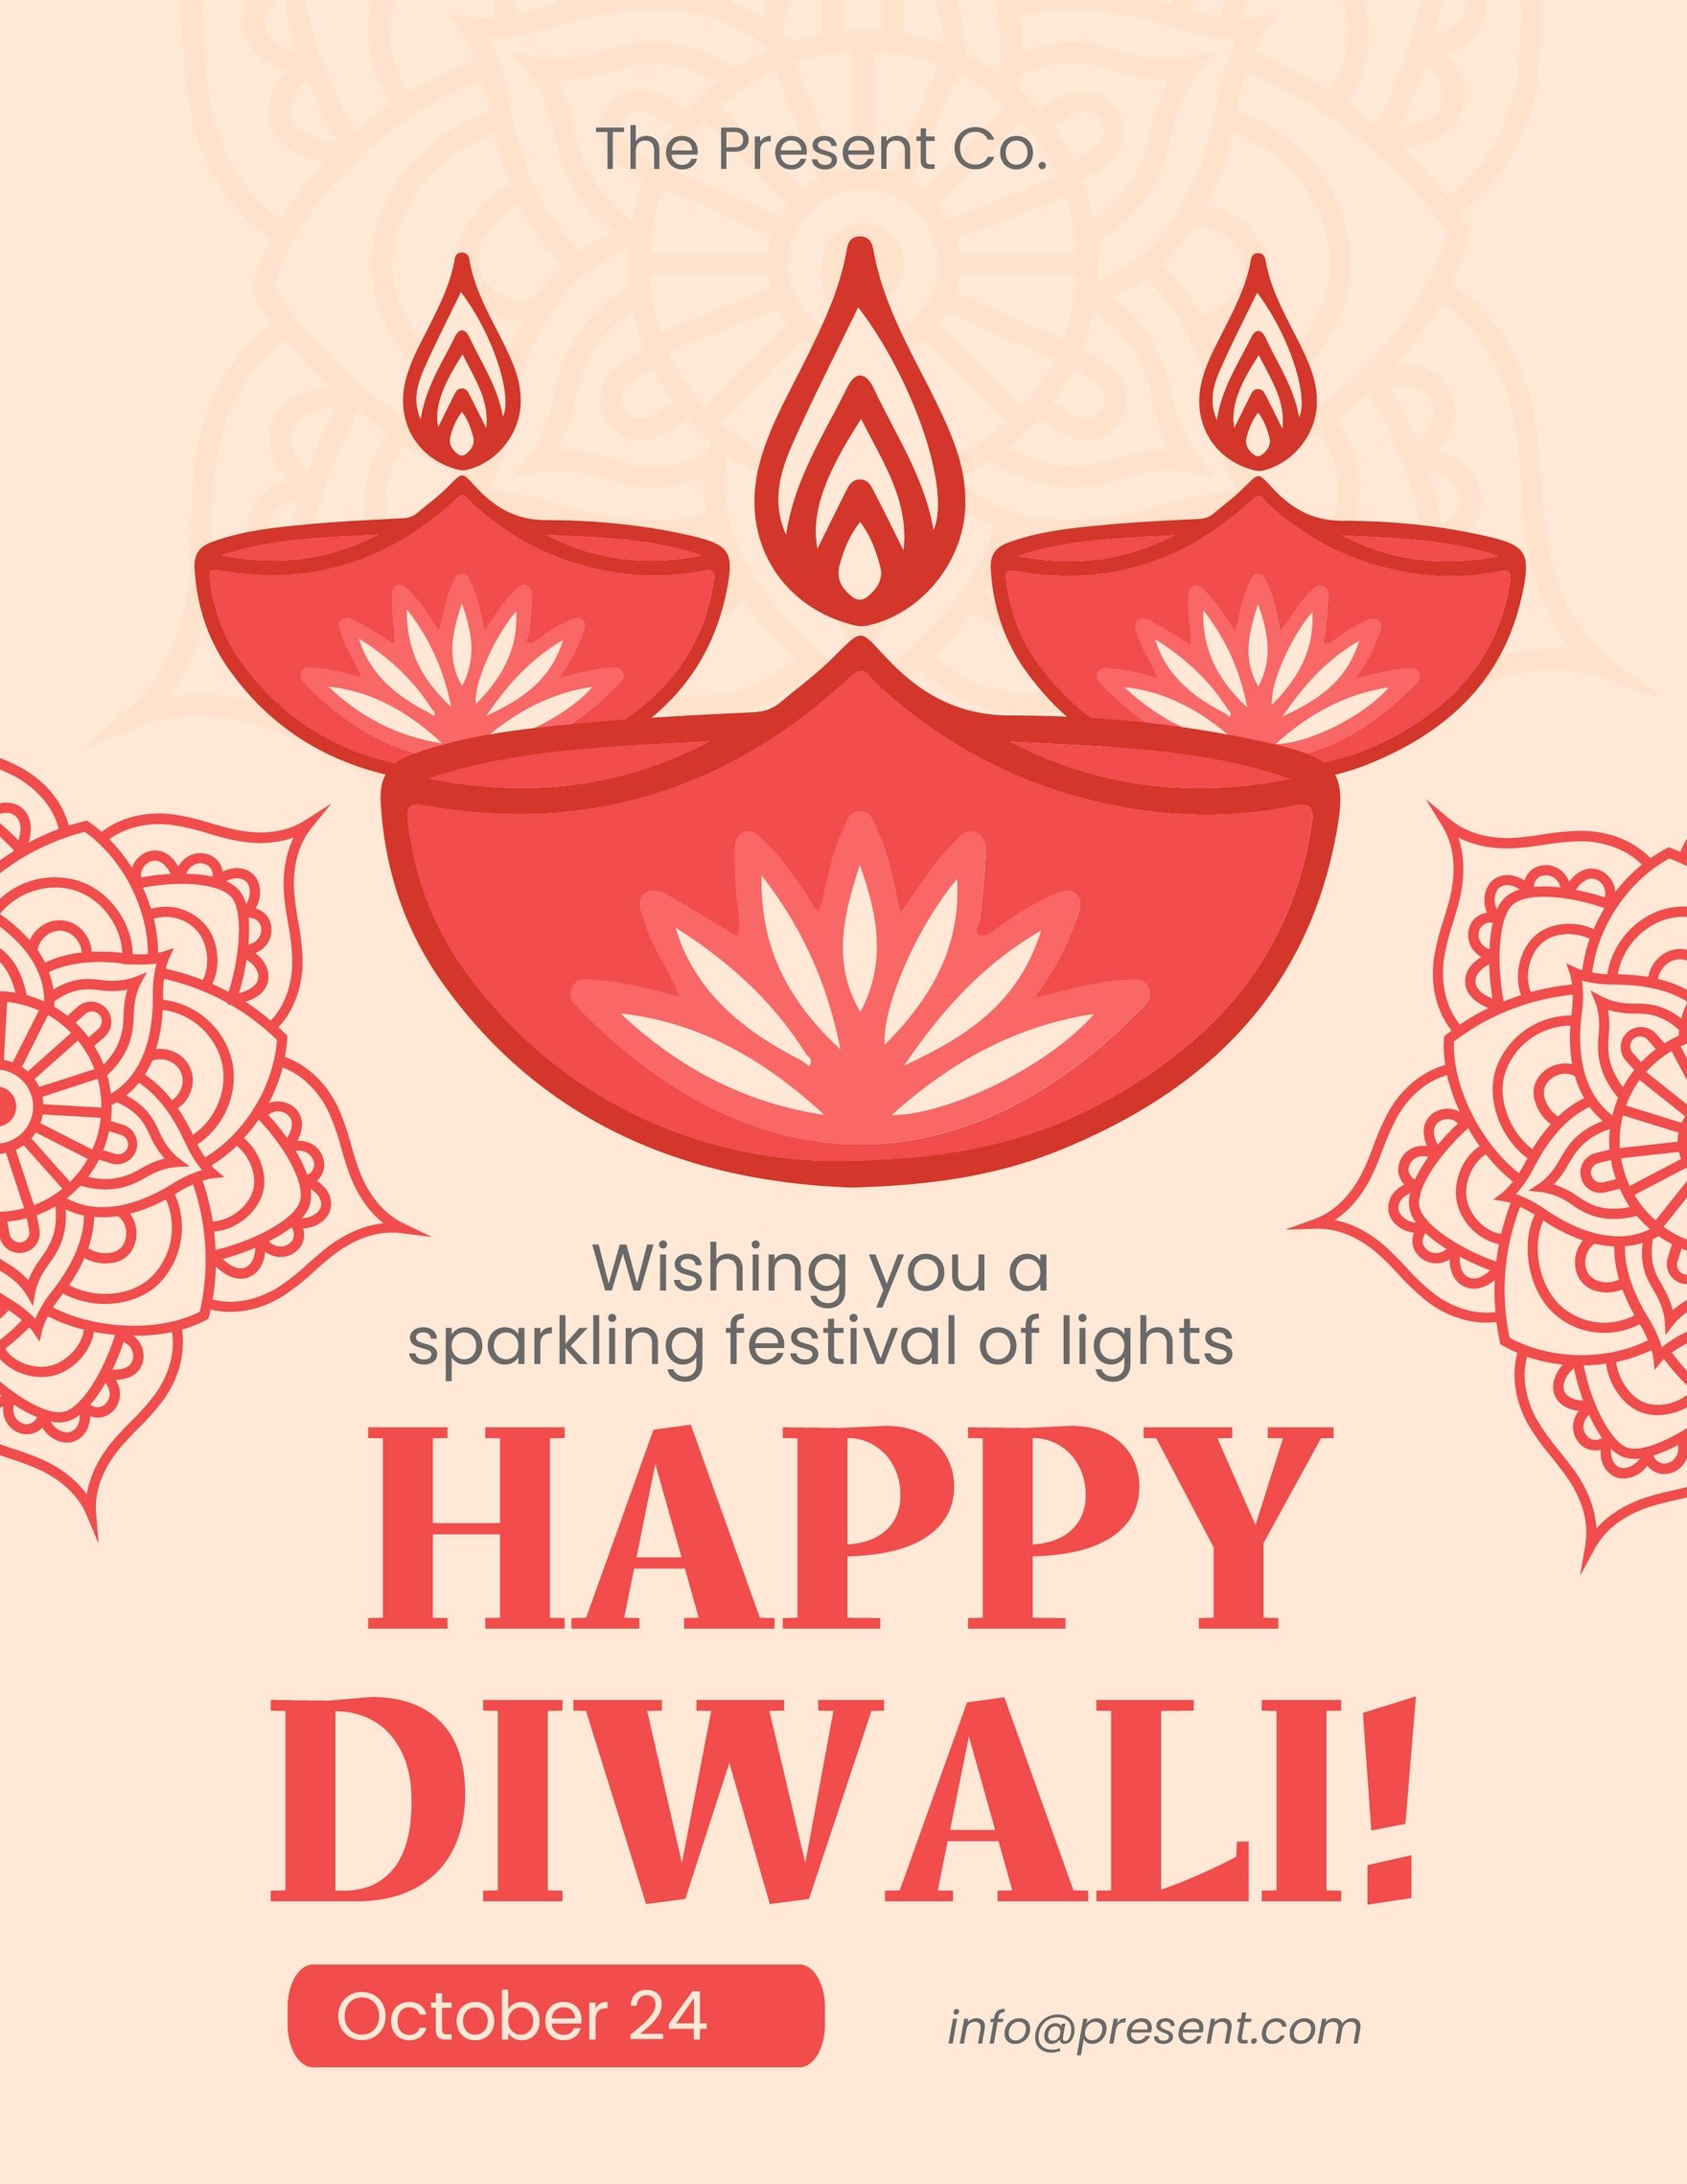 Free Happy Diwali Flyer in Word, Google Docs, Illustrator, PSD, Apple Pages, Publisher, EPS, SVG, JPG, PNG